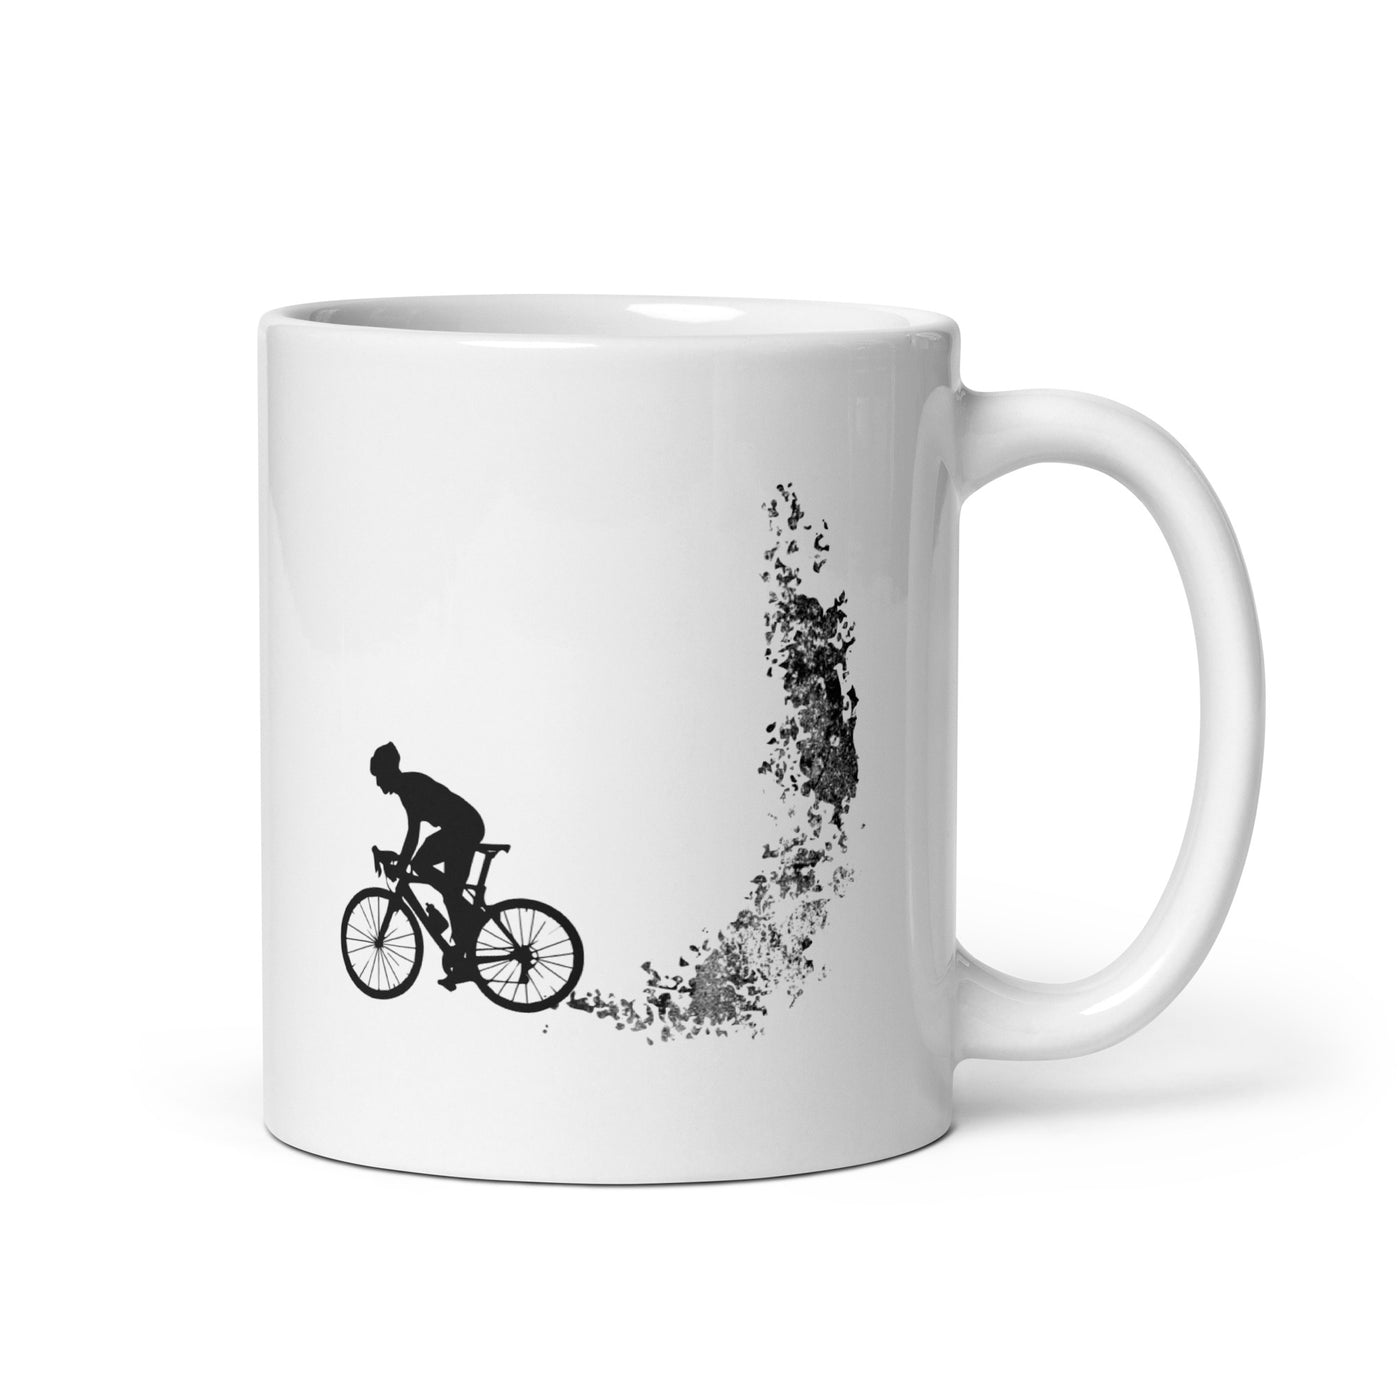 Cycling (9) - Tasse fahrrad